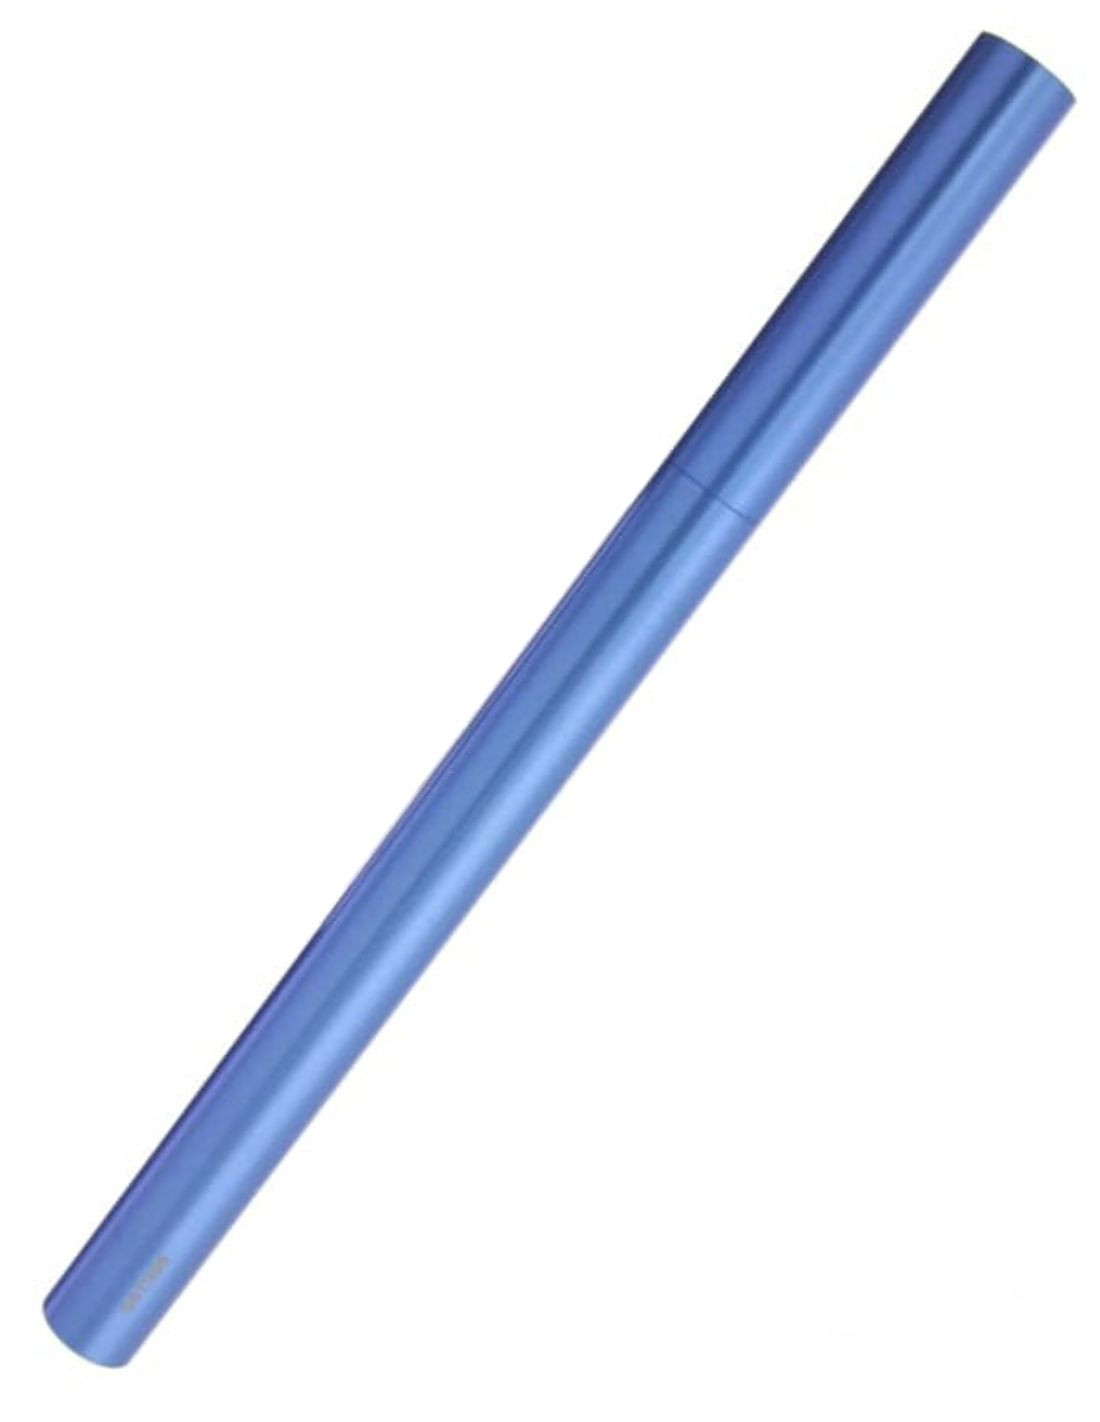 Drillog classical material AL (Long) Nib Holder - Lapis Lazuli Blue